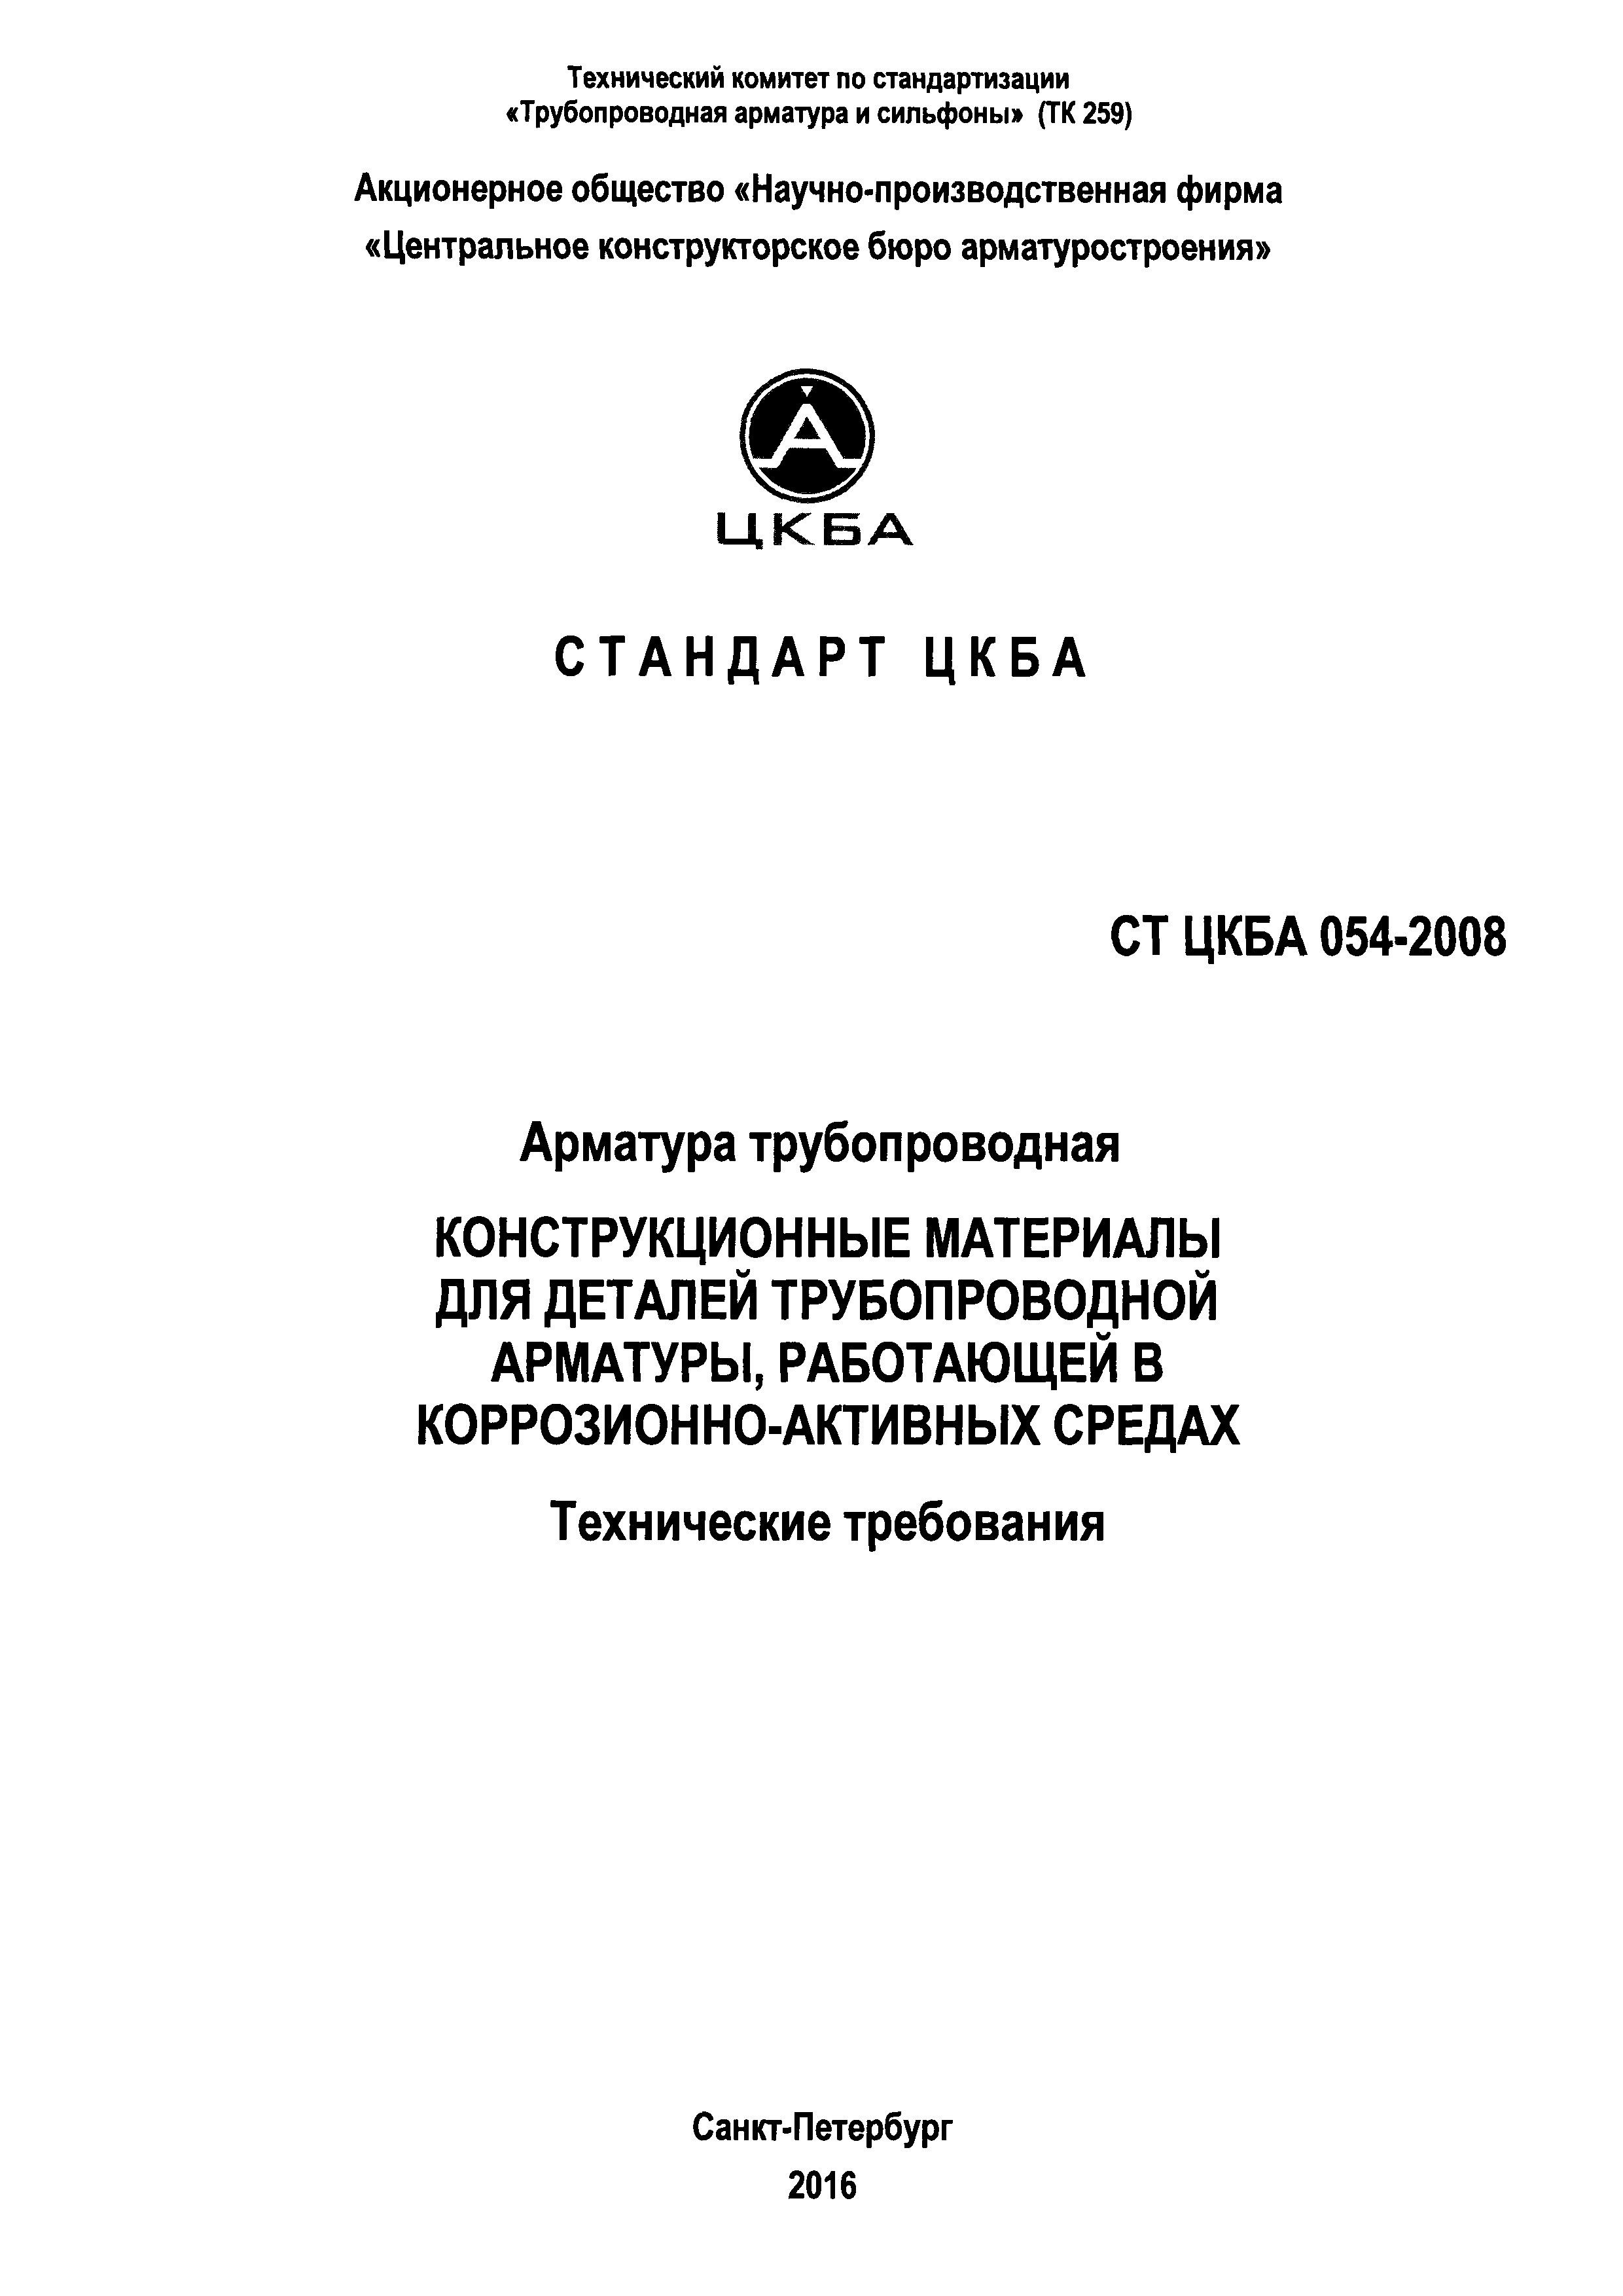 СТ ЦКБА 054-2008